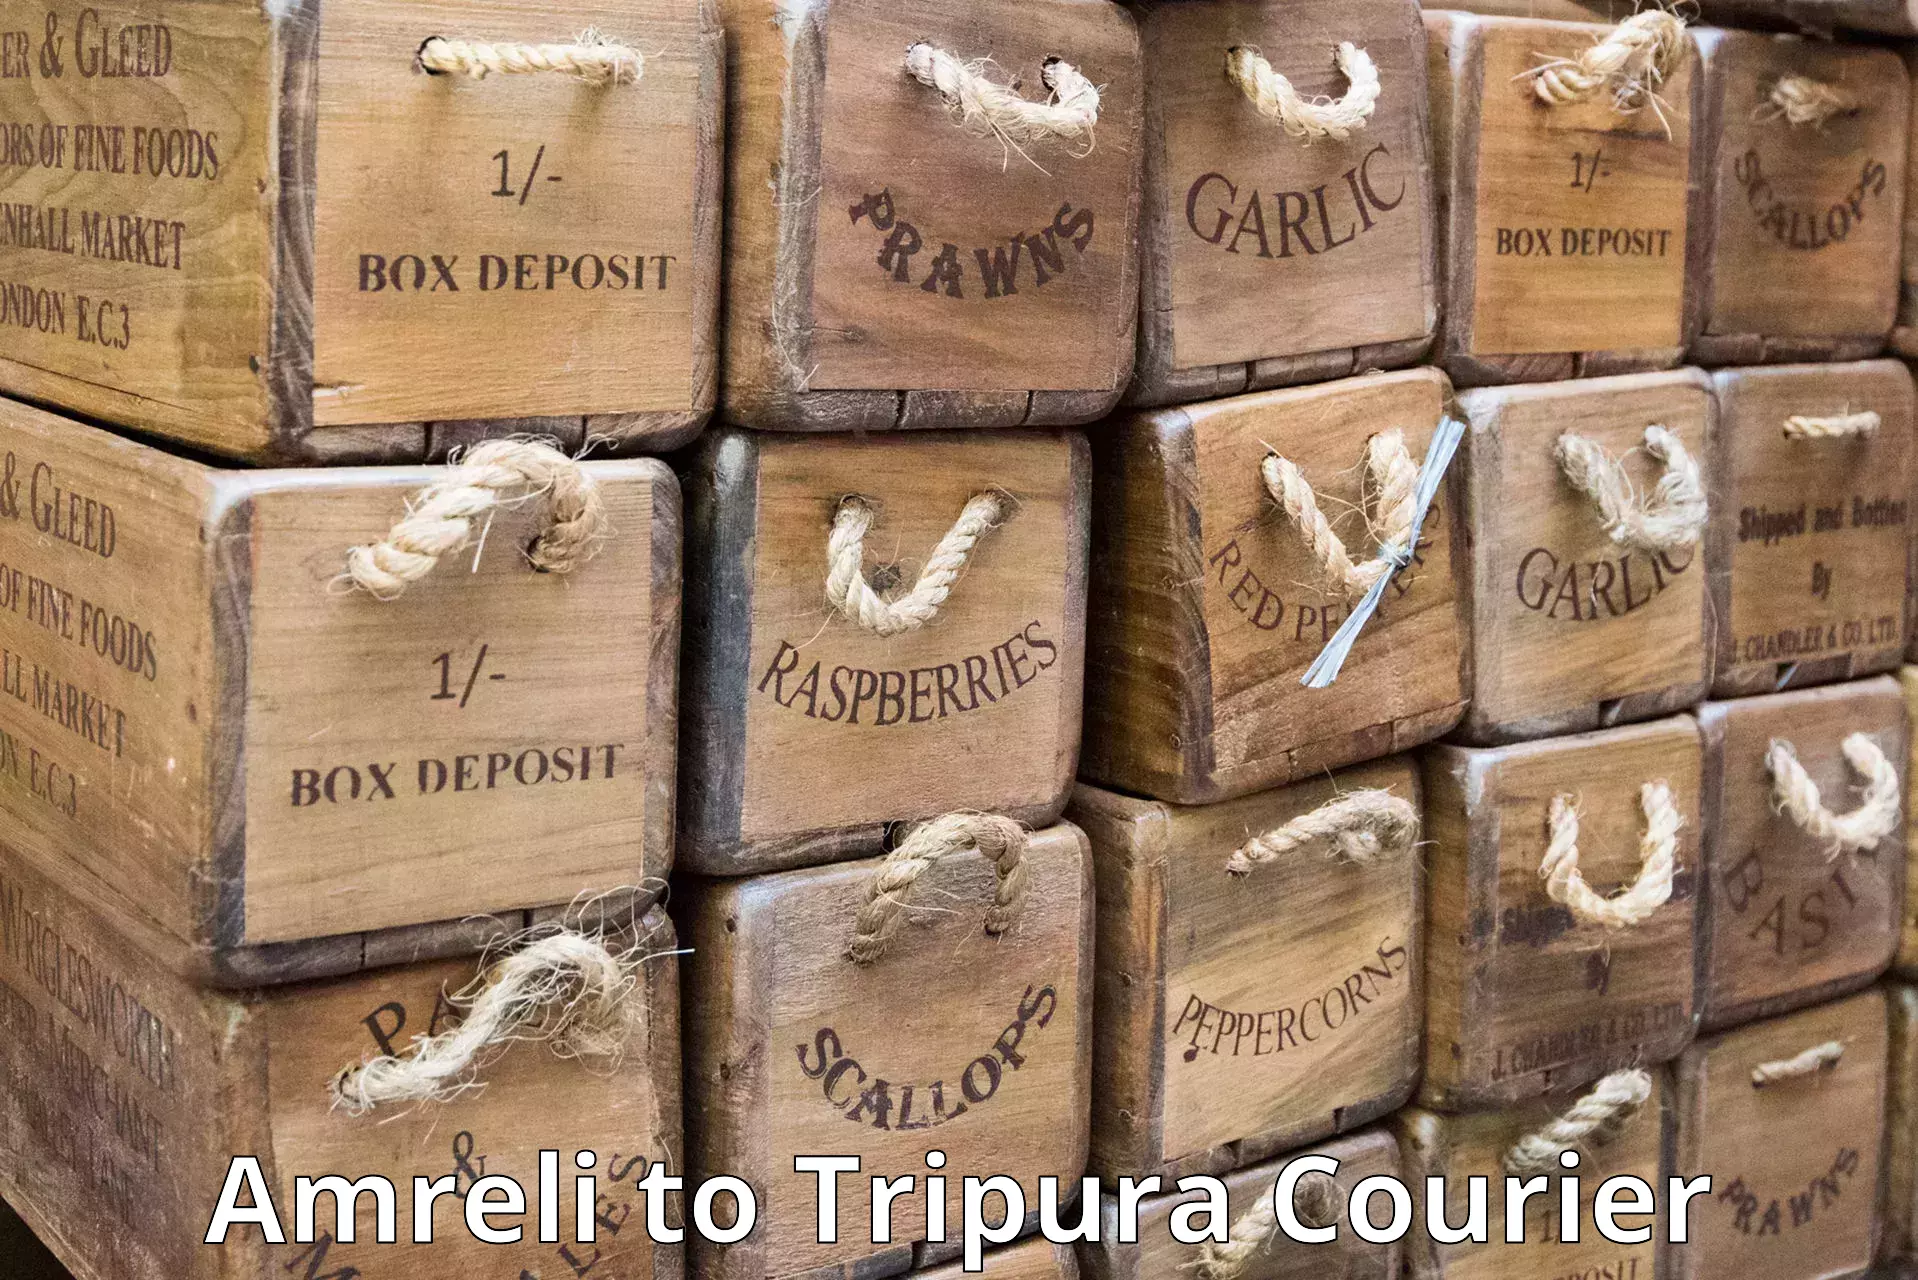 Courier service partnerships Amreli to Udaipur Tripura